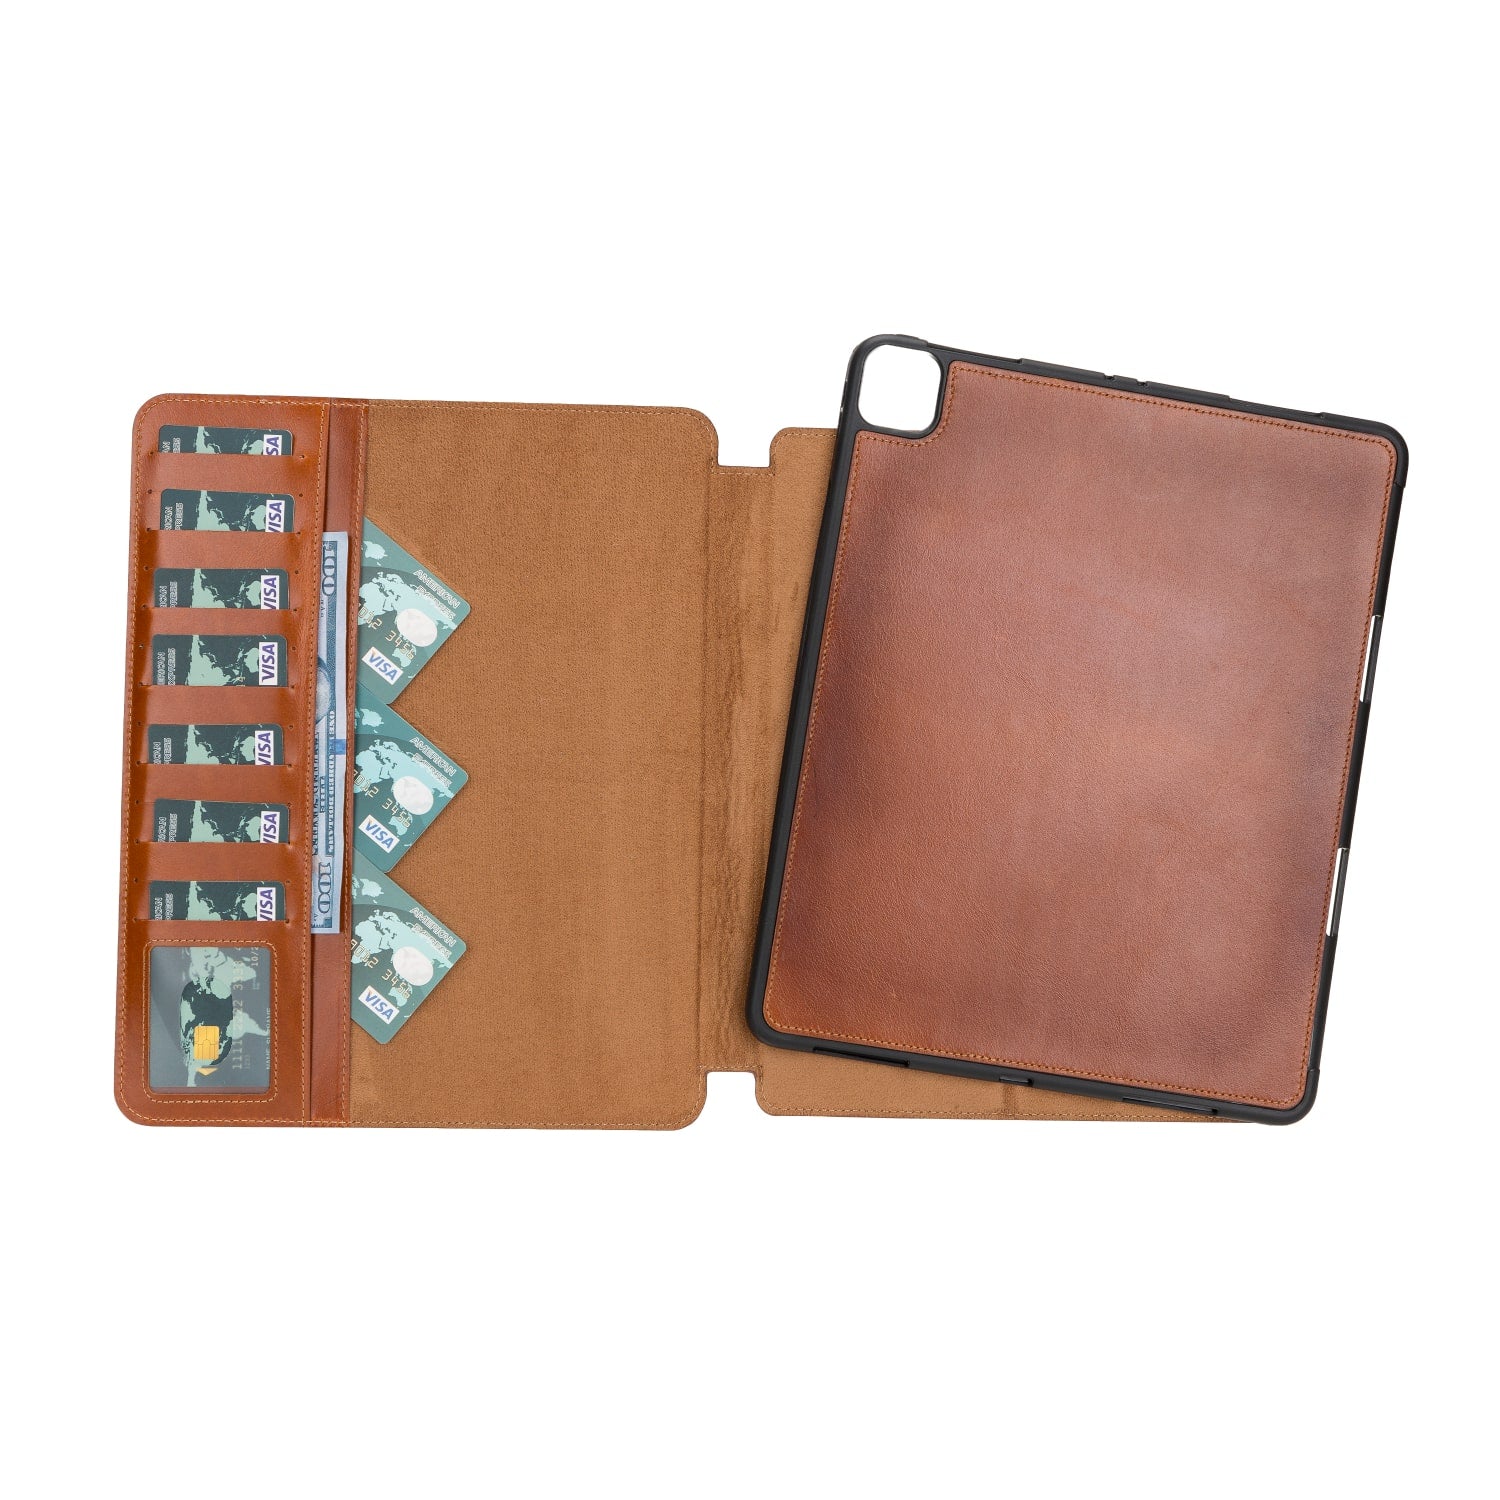 Brown Leather iPad Pro 12.9 Inc Smart Folio Case with Apple Pen Holder - Bomonti - 1